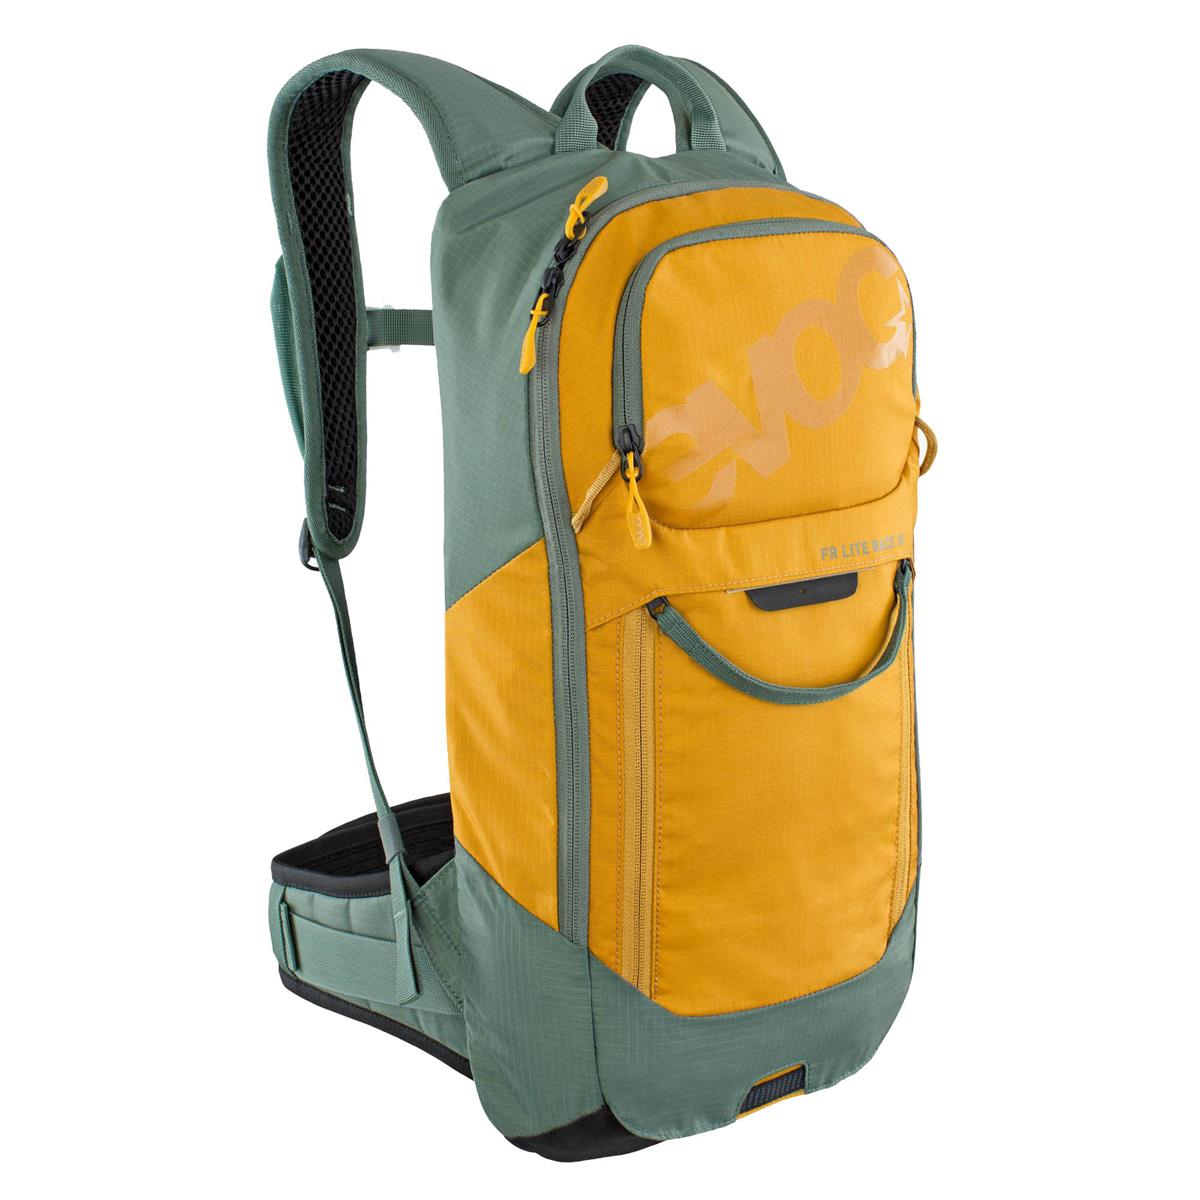 FR LITE RACE 10 Backpack With Back Protector 10L Green/Orange Size M/L